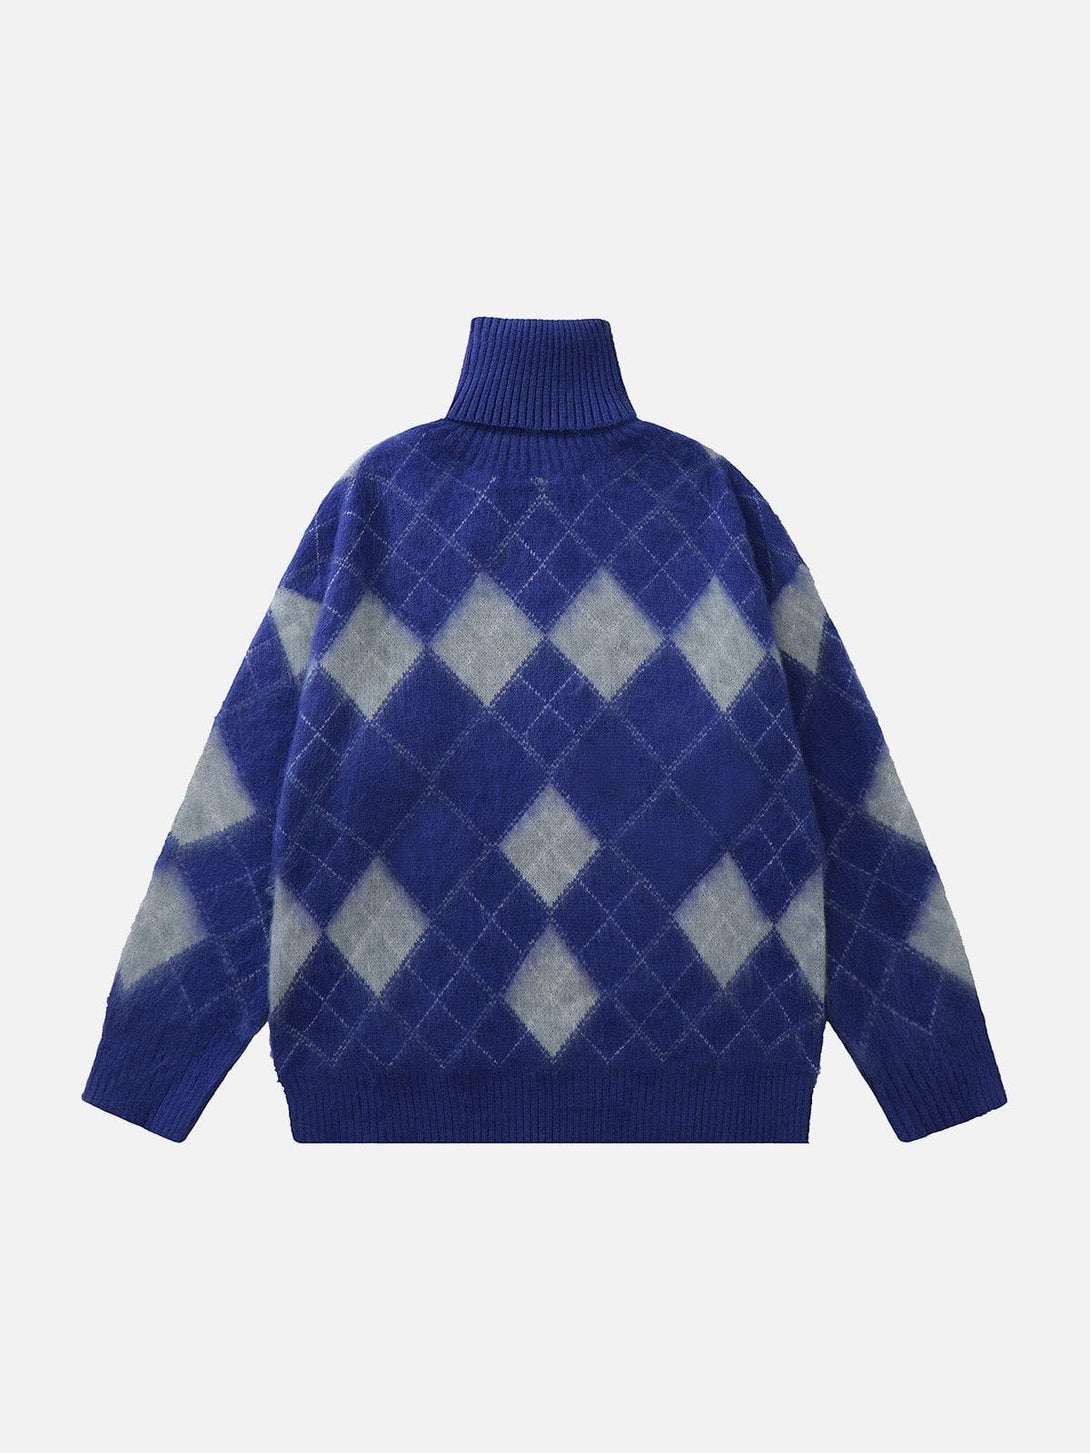 Majesda® - High Neck Diamond Color Block Sweater outfit ideas streetwear fashion